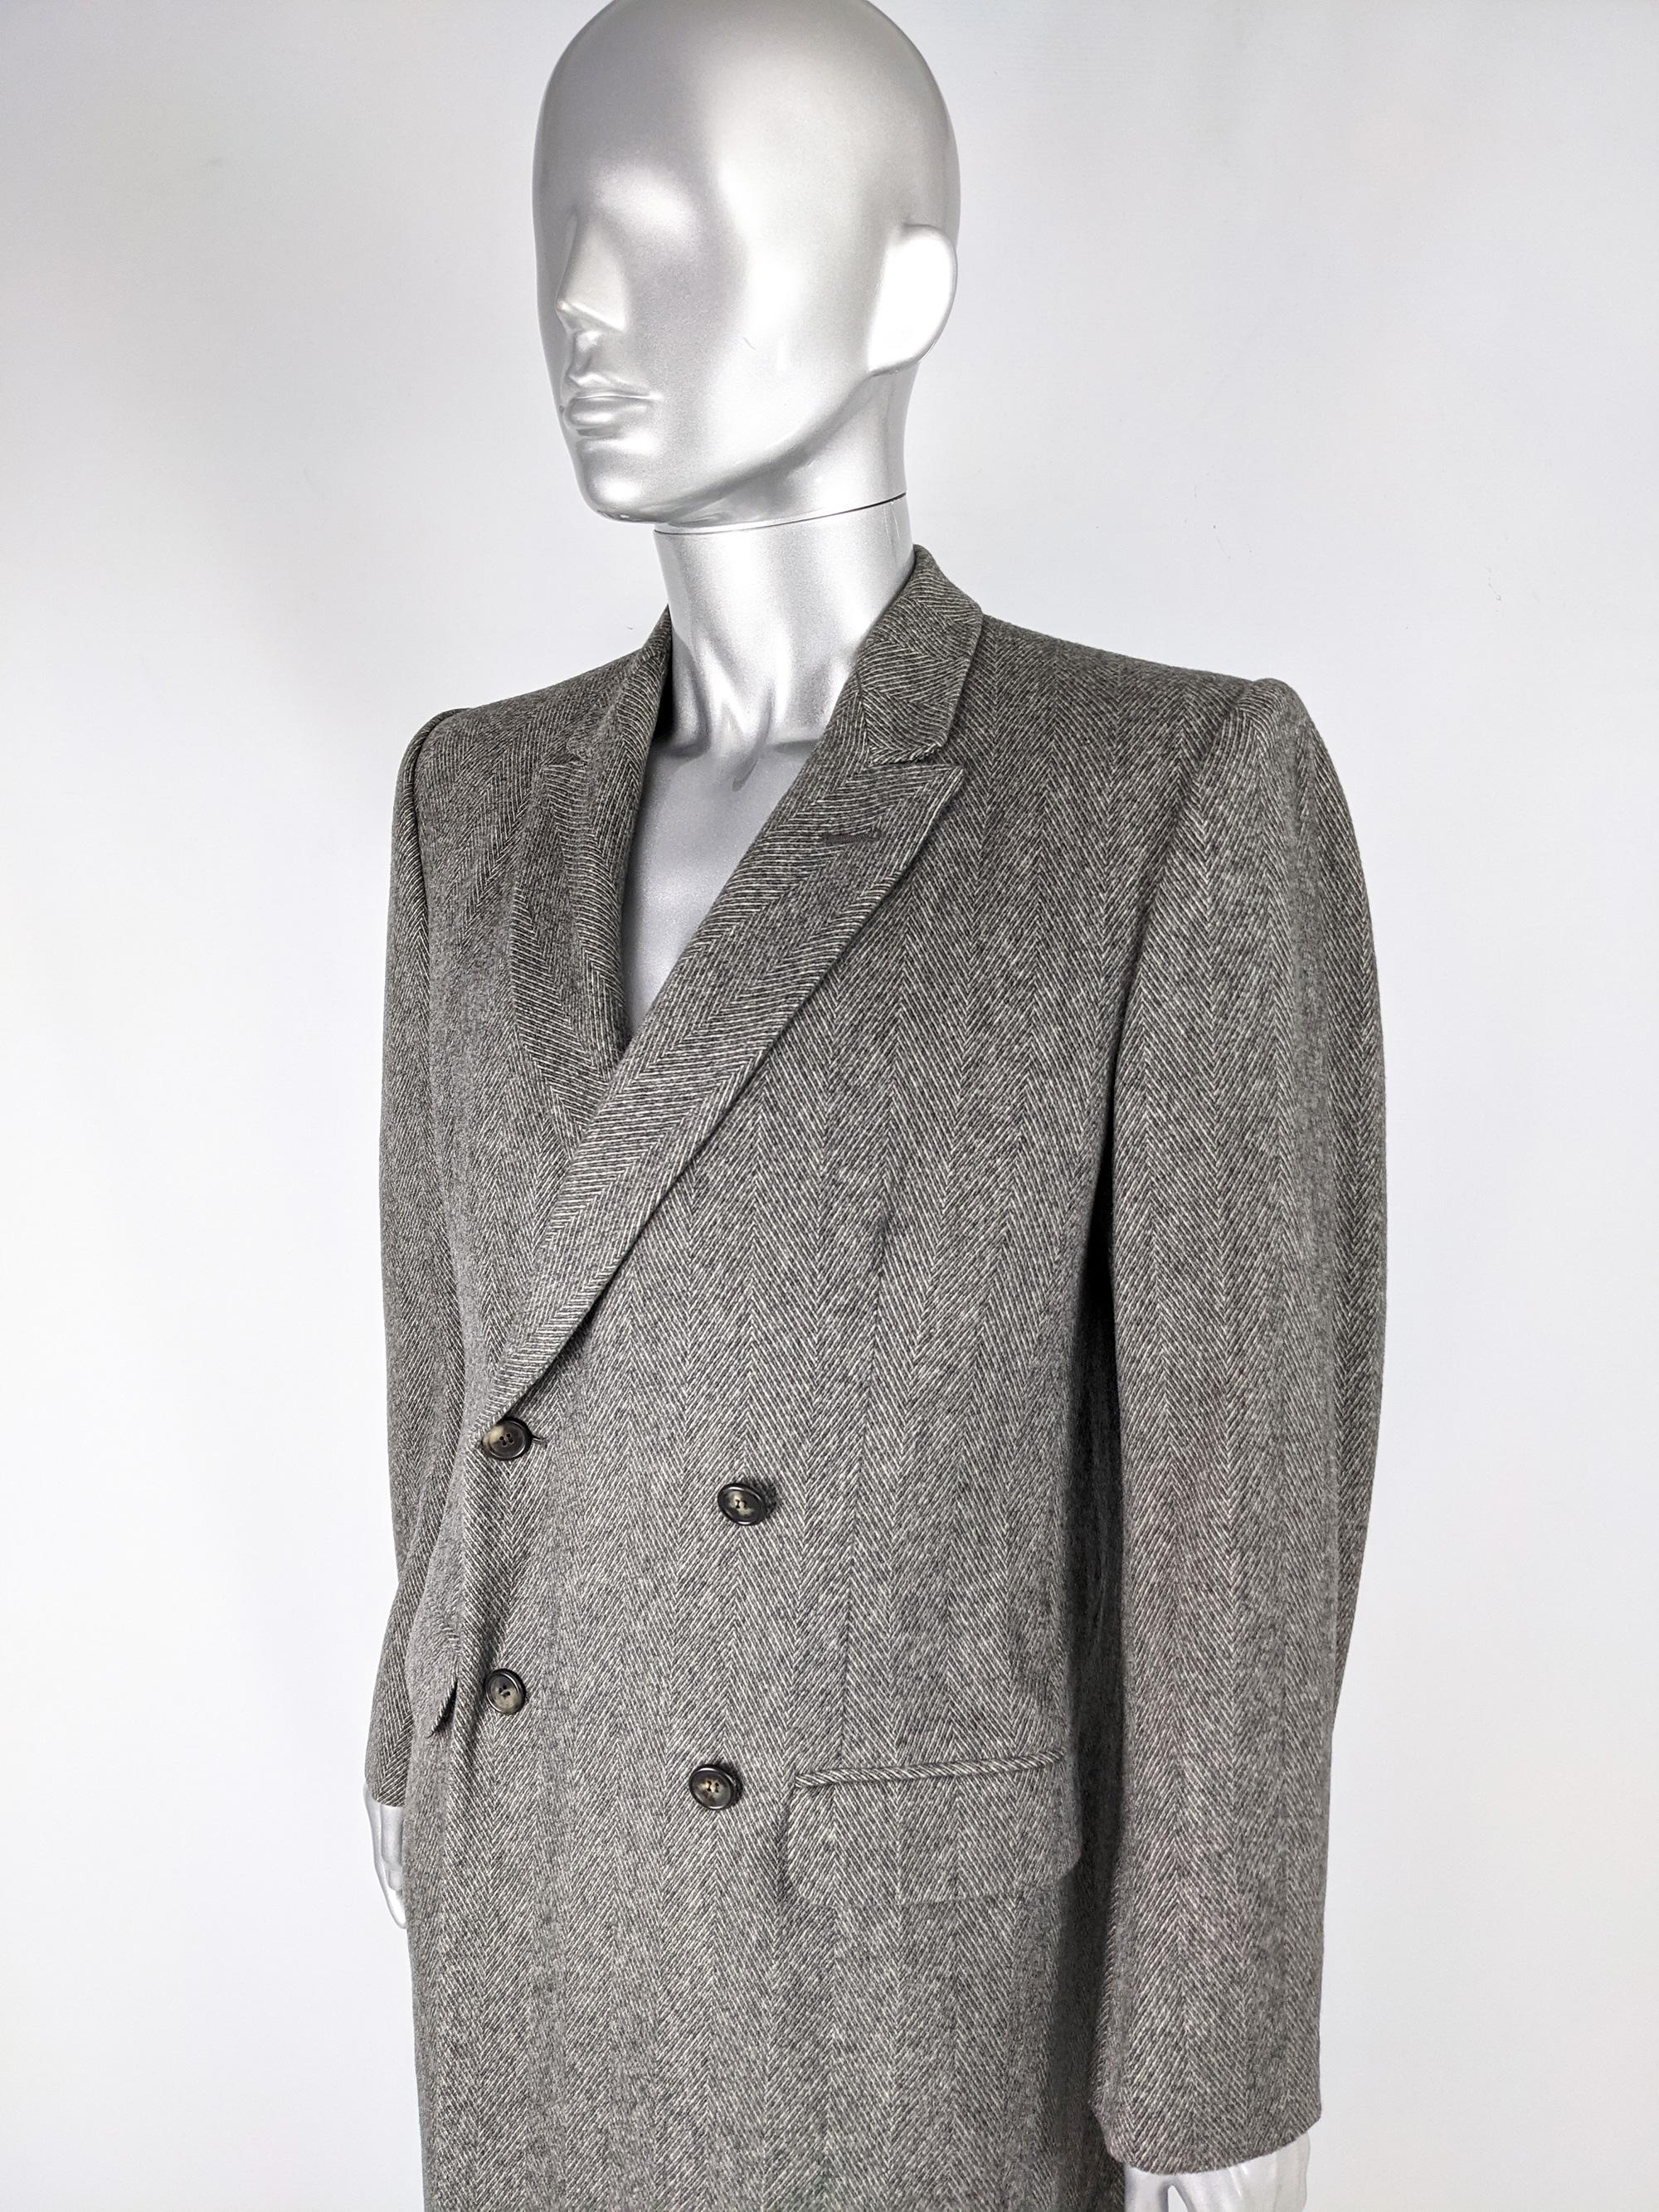 Men's Alexander Mcqueen Archival Bold Shouldered Pure Cashmere Overcoat, A/W 2007